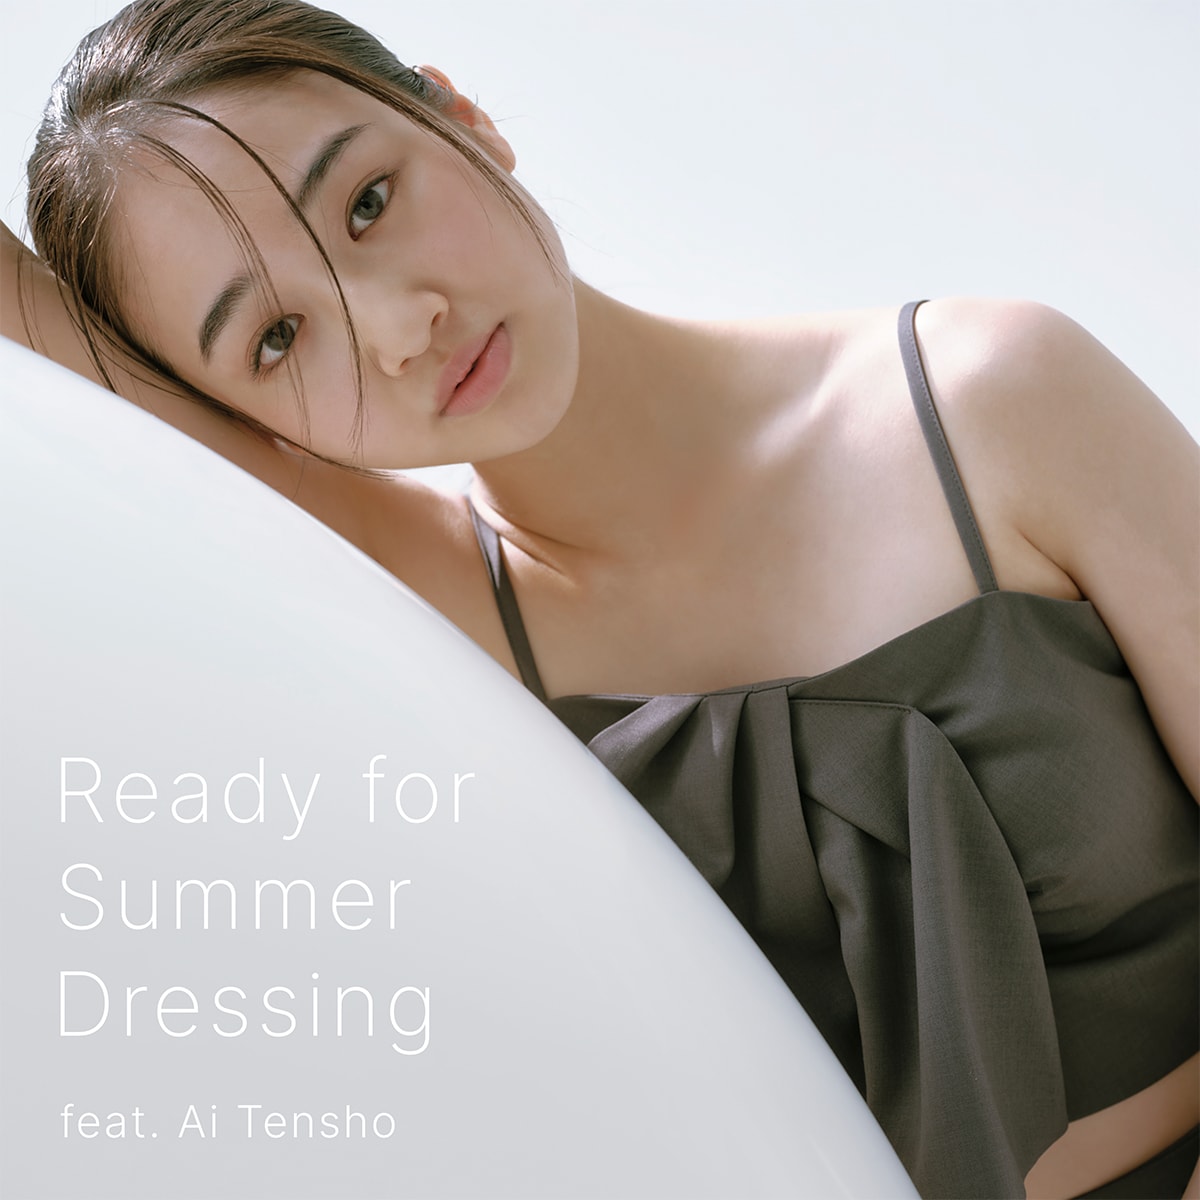 Ready for Summer Dressing feat. Ai Tensho